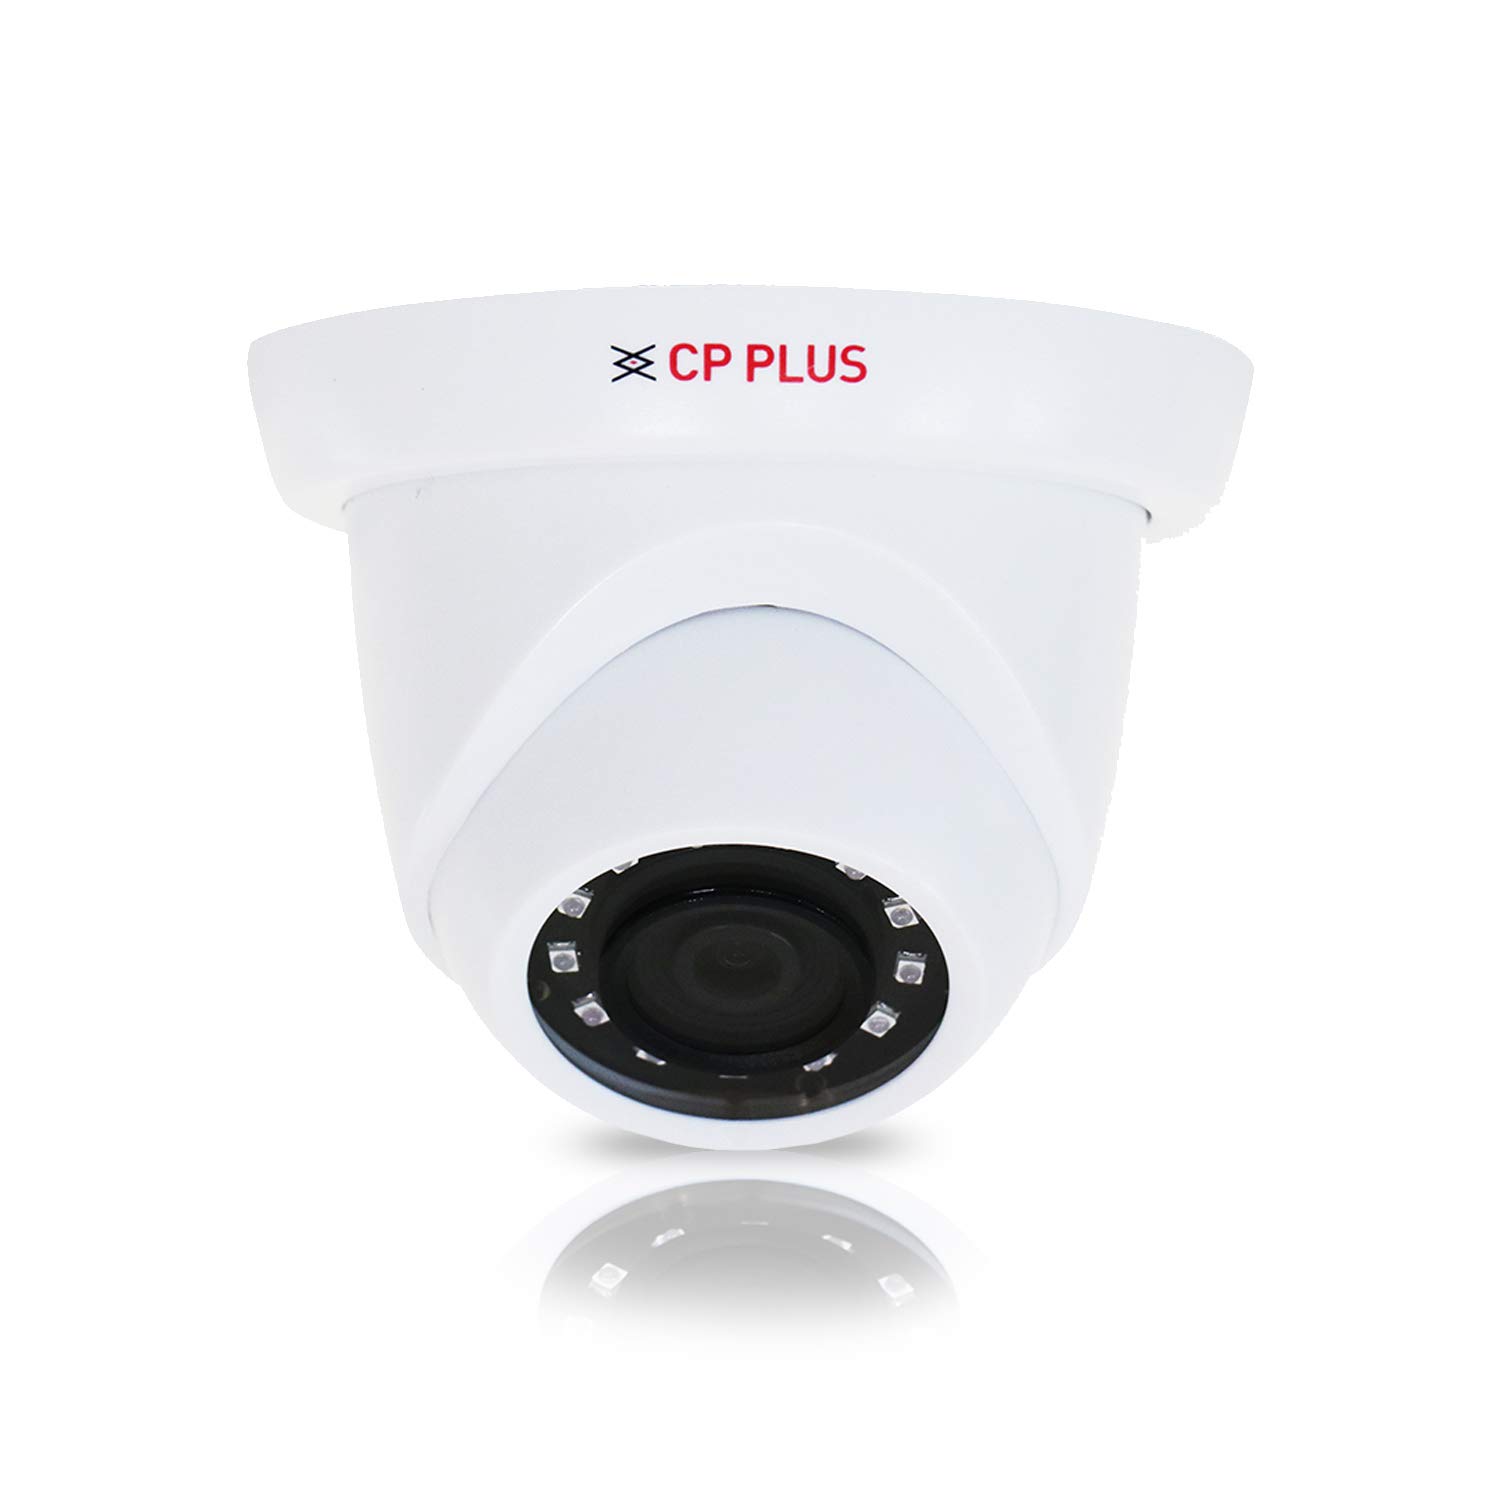 CP Plus home security camera